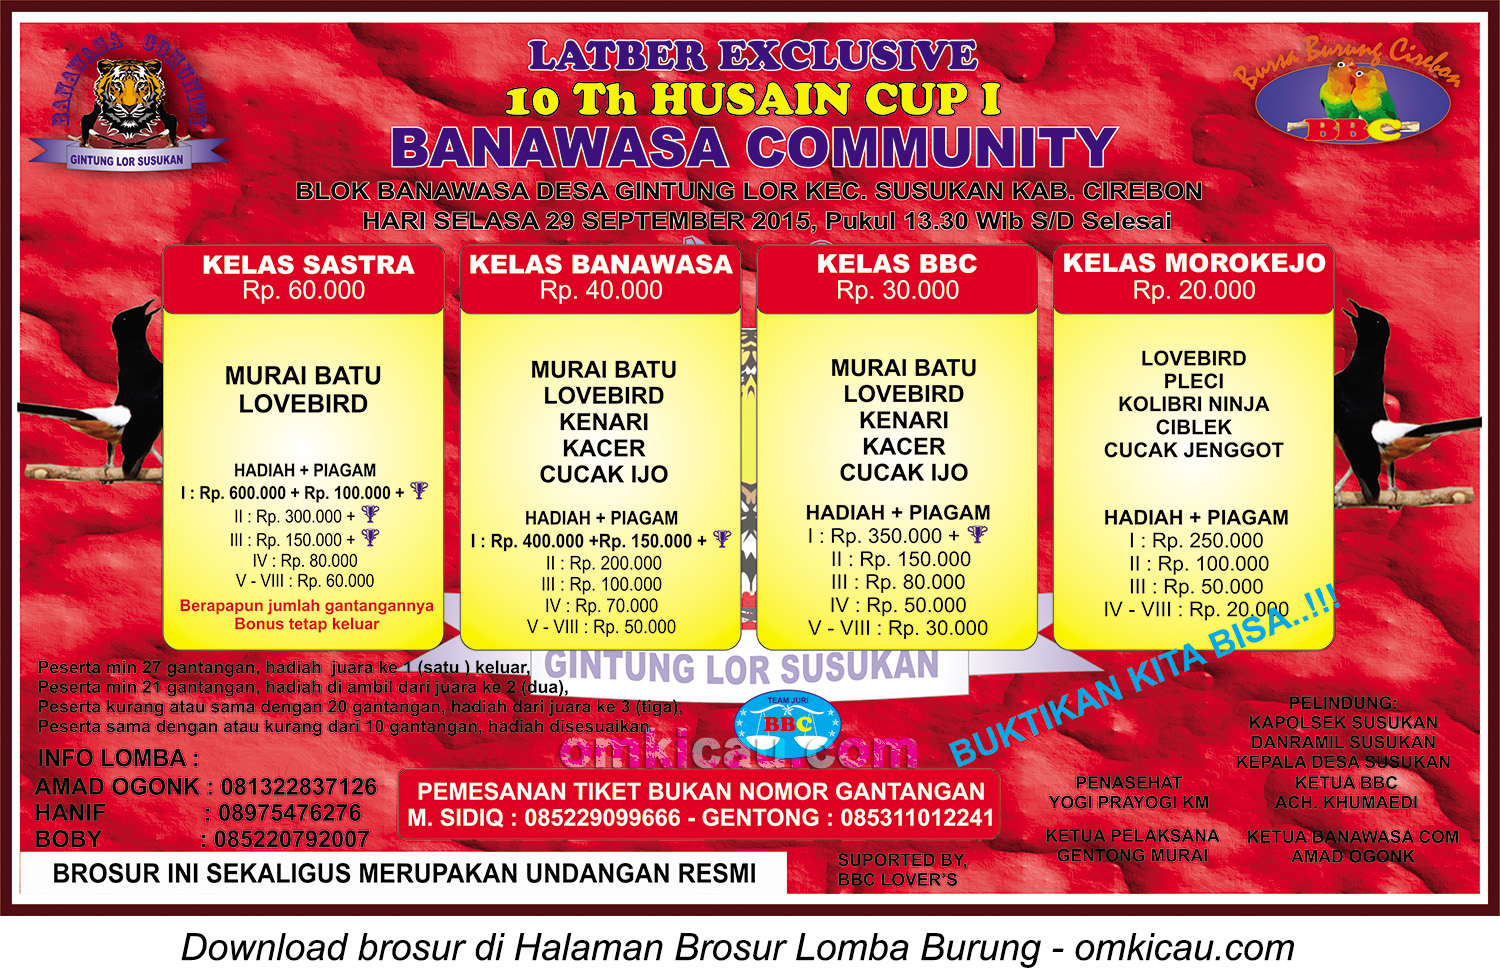 Brosur Latber Exclusive 10Th Husain CUp I Banawasa Community, Cirebon, 29 September 2015